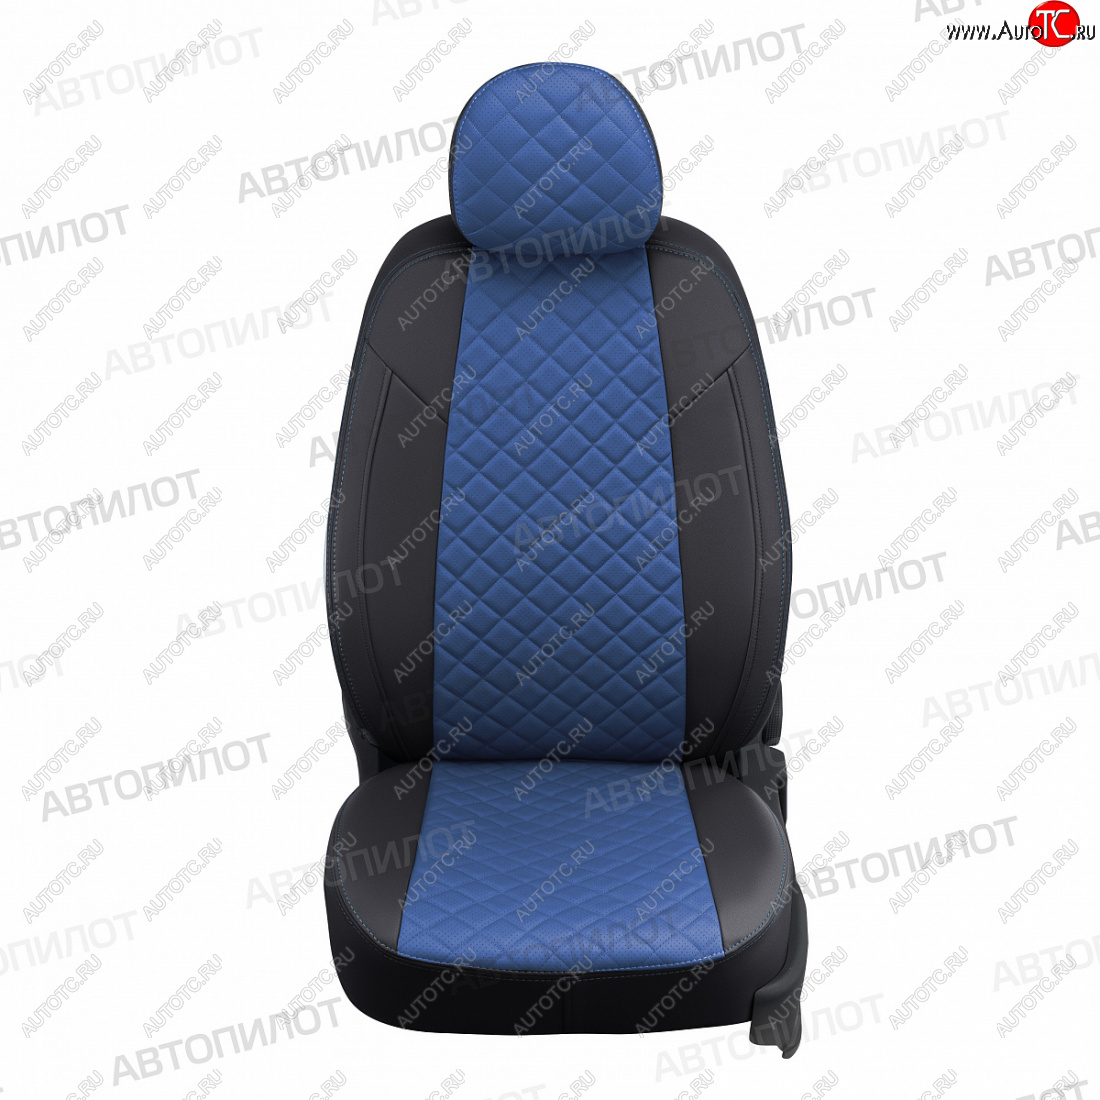 7 799 р. Чехлы сидений (экокожа) Автопилот Ромб  KIA Ceed  2 JD (2012-2018) (черный/синий)